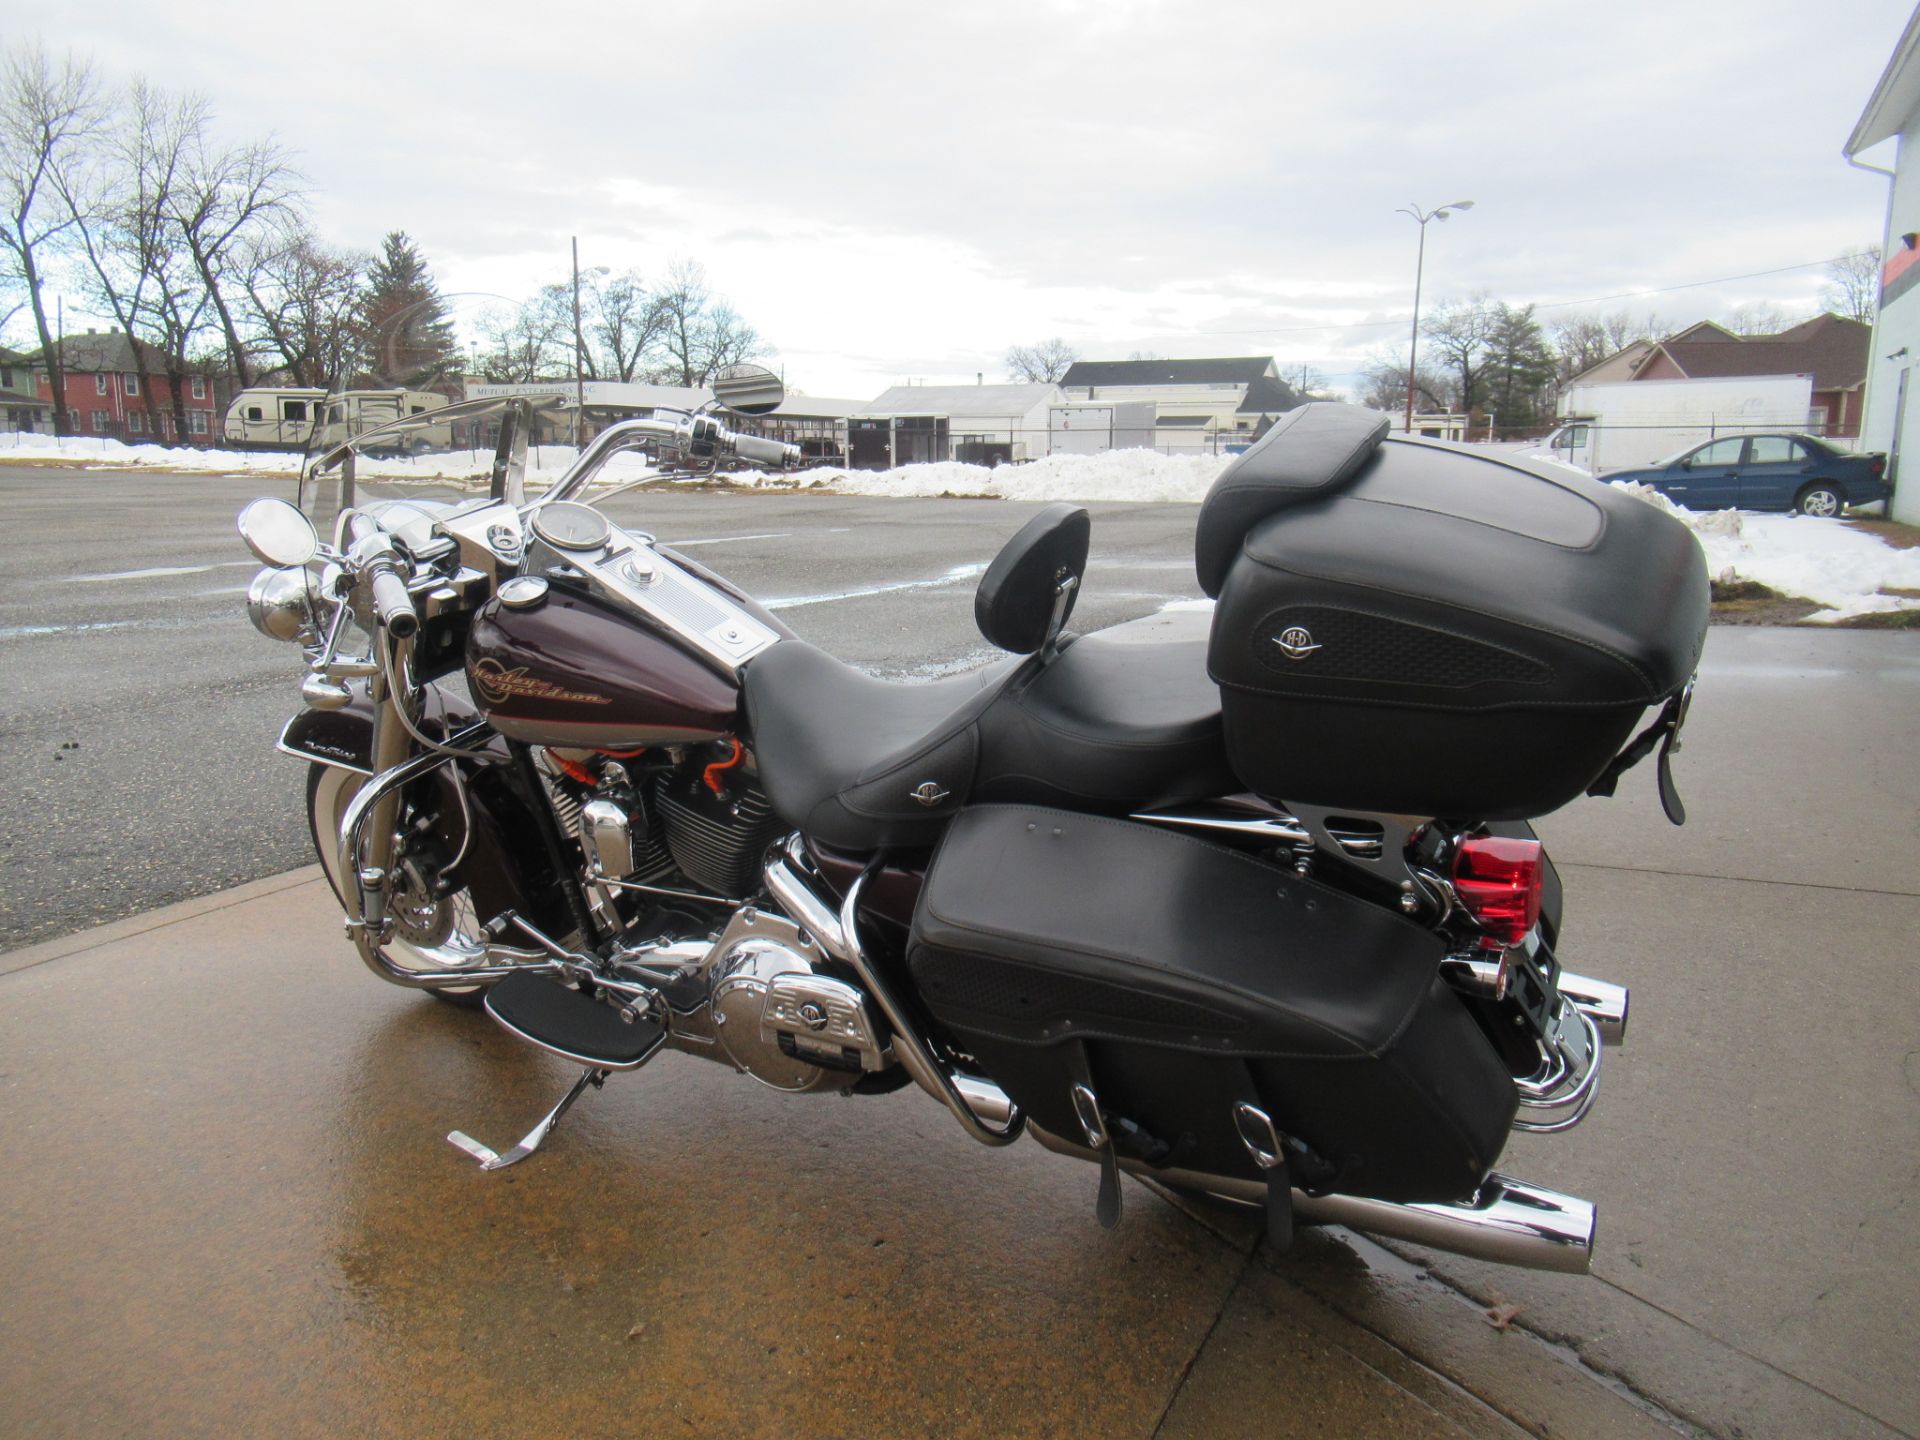 2007 Harley-Davidson Road King® in Springfield, Massachusetts - Photo 5